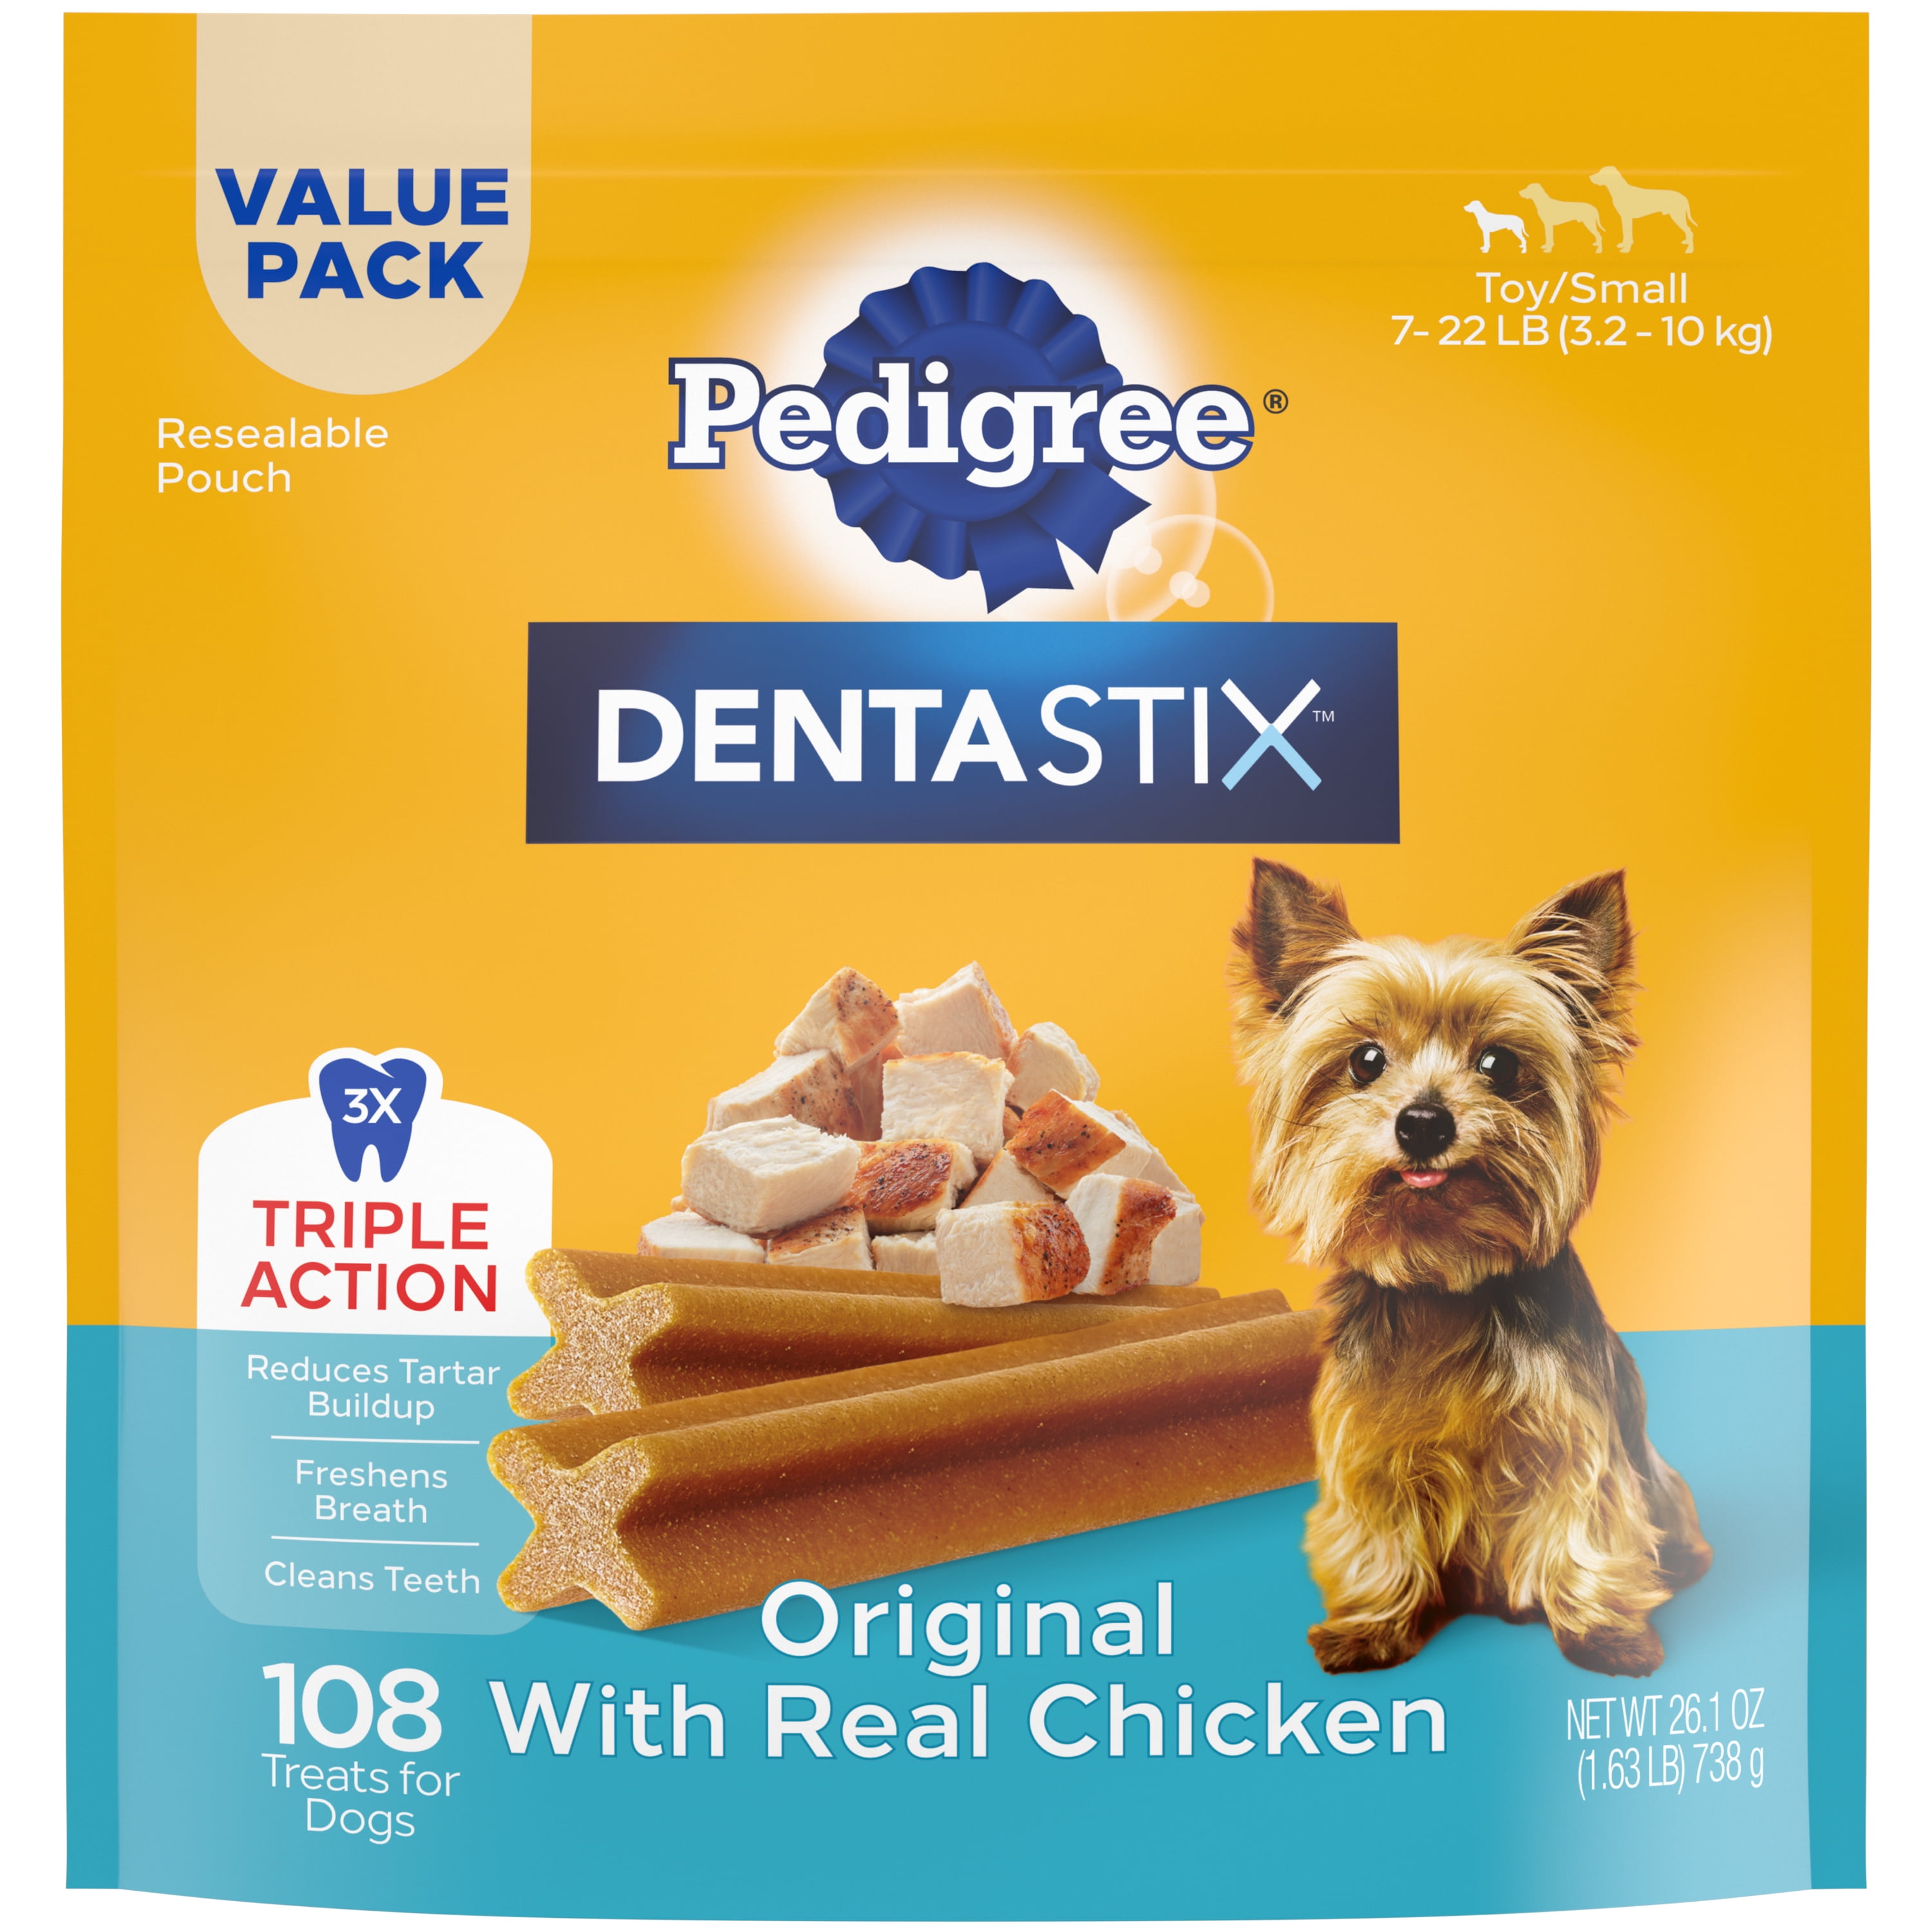 Pedigree Dentastix Original Flavor Dental Bones Treats for Toy/Small Dogs, 1.68 lb. Value Pack (108 Treats)